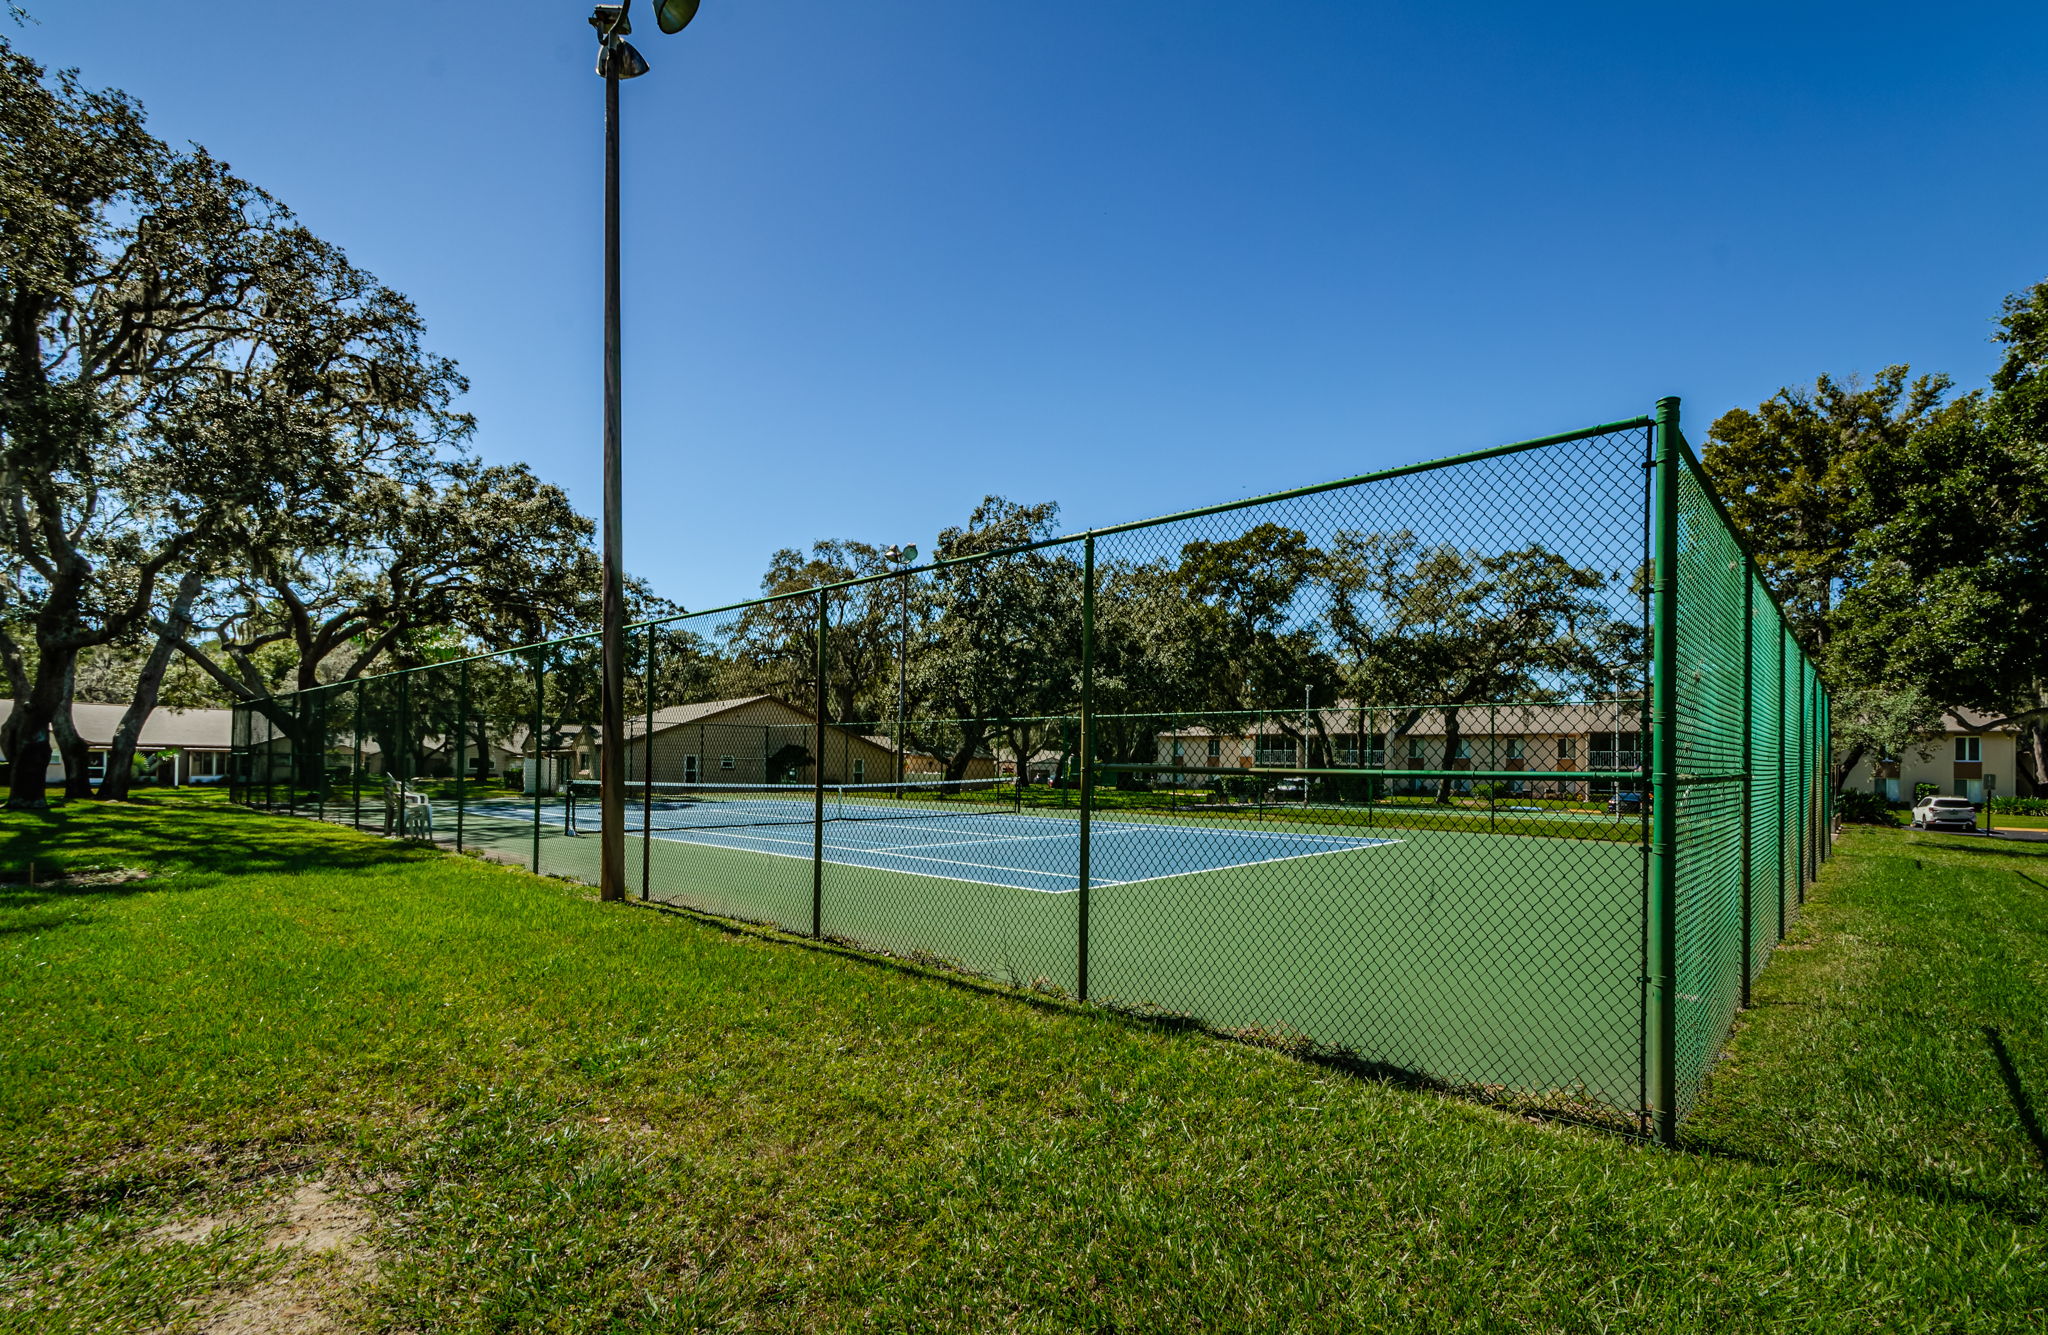 Tennis Court 1B